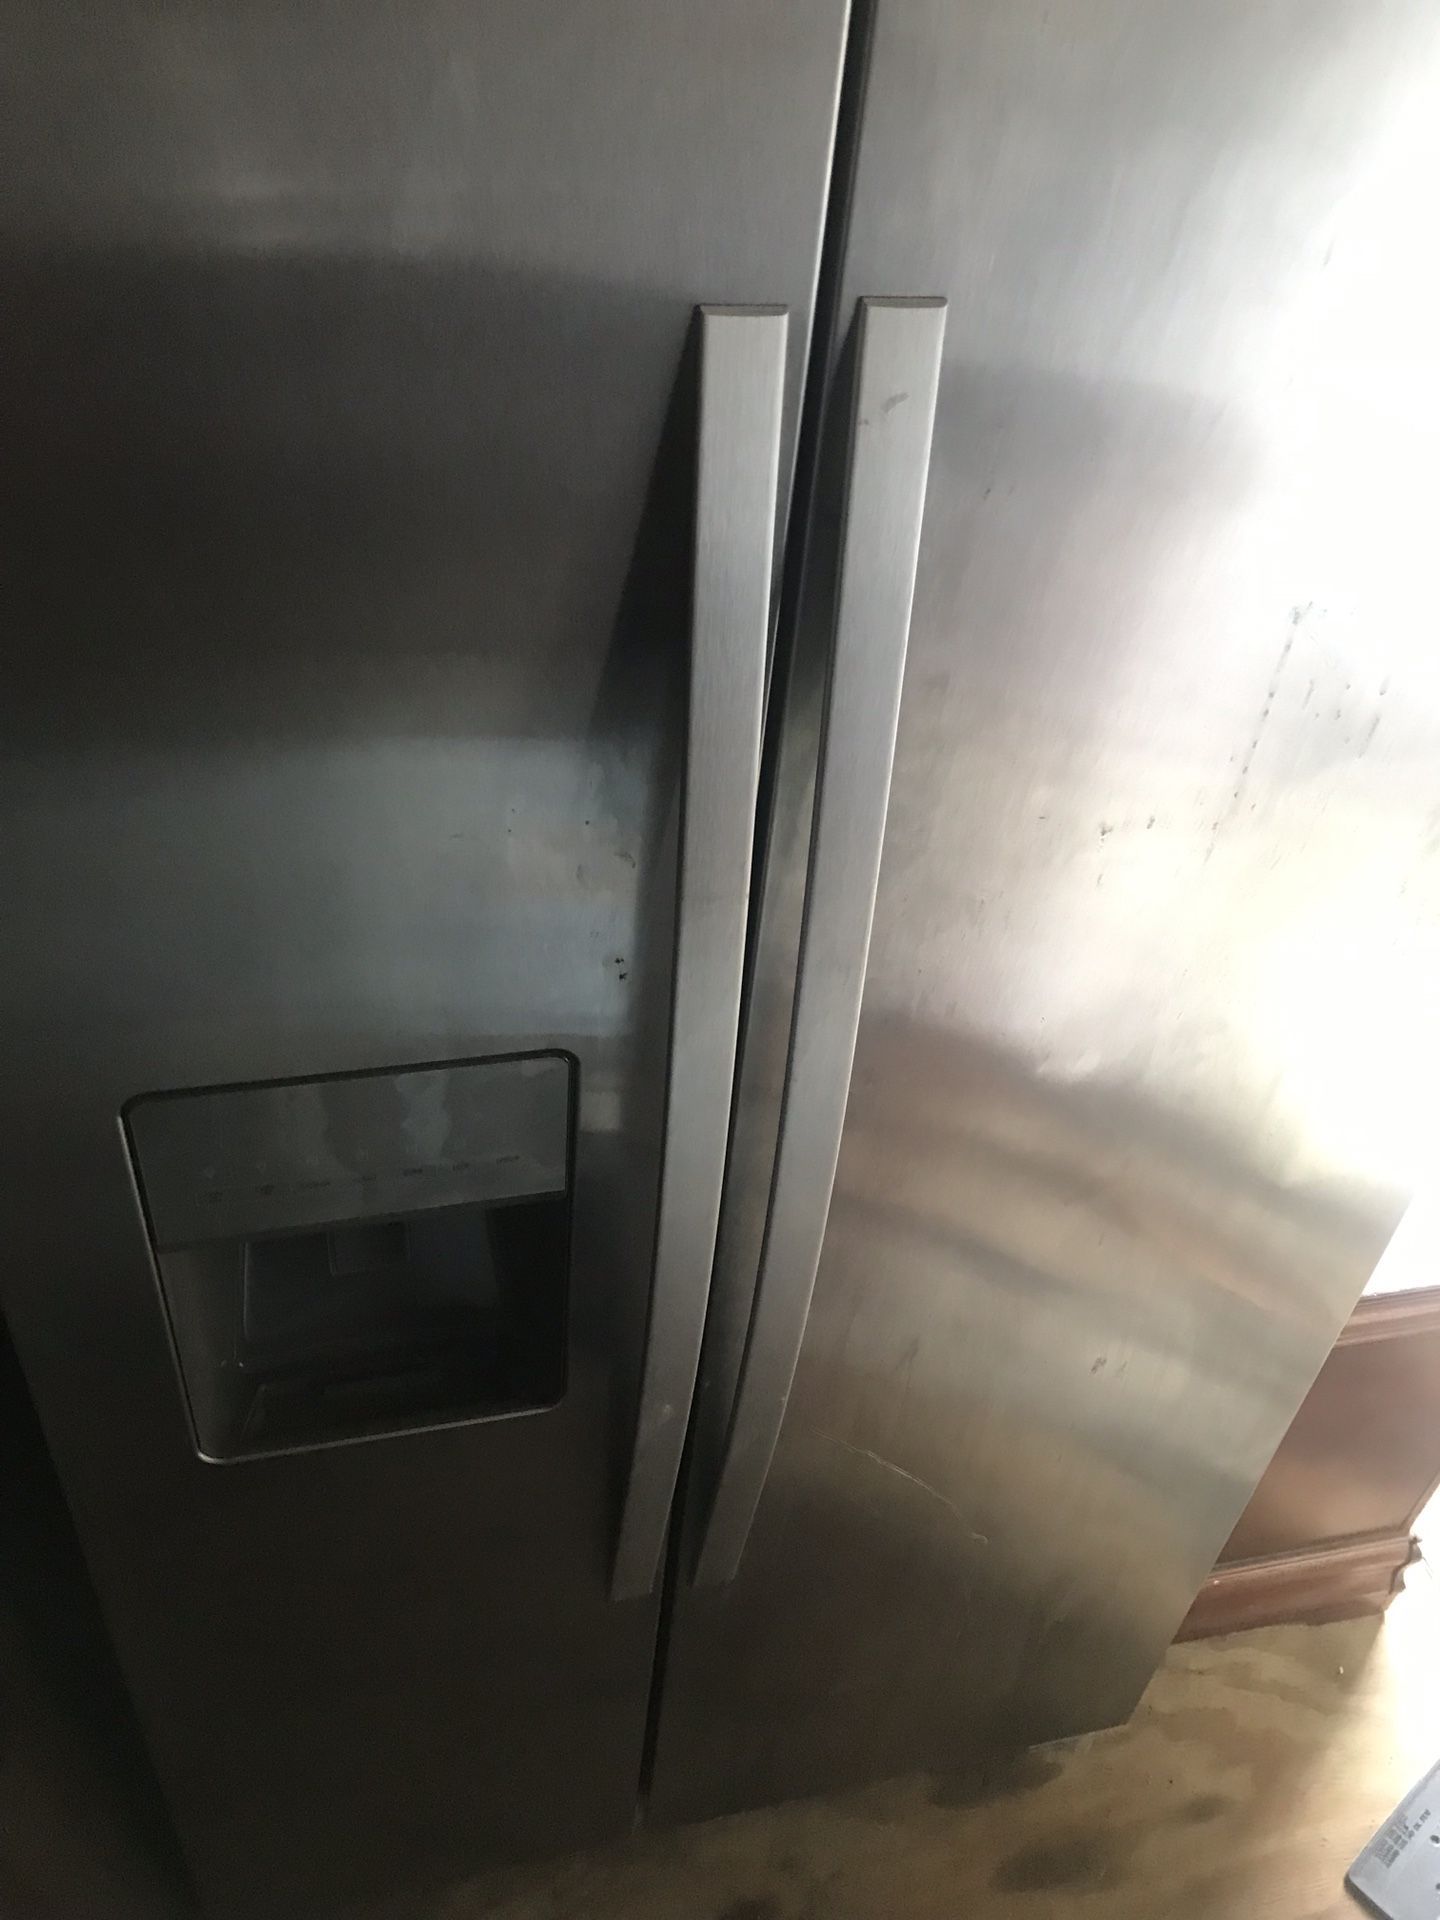 Stainless steel refrigerator/freezer